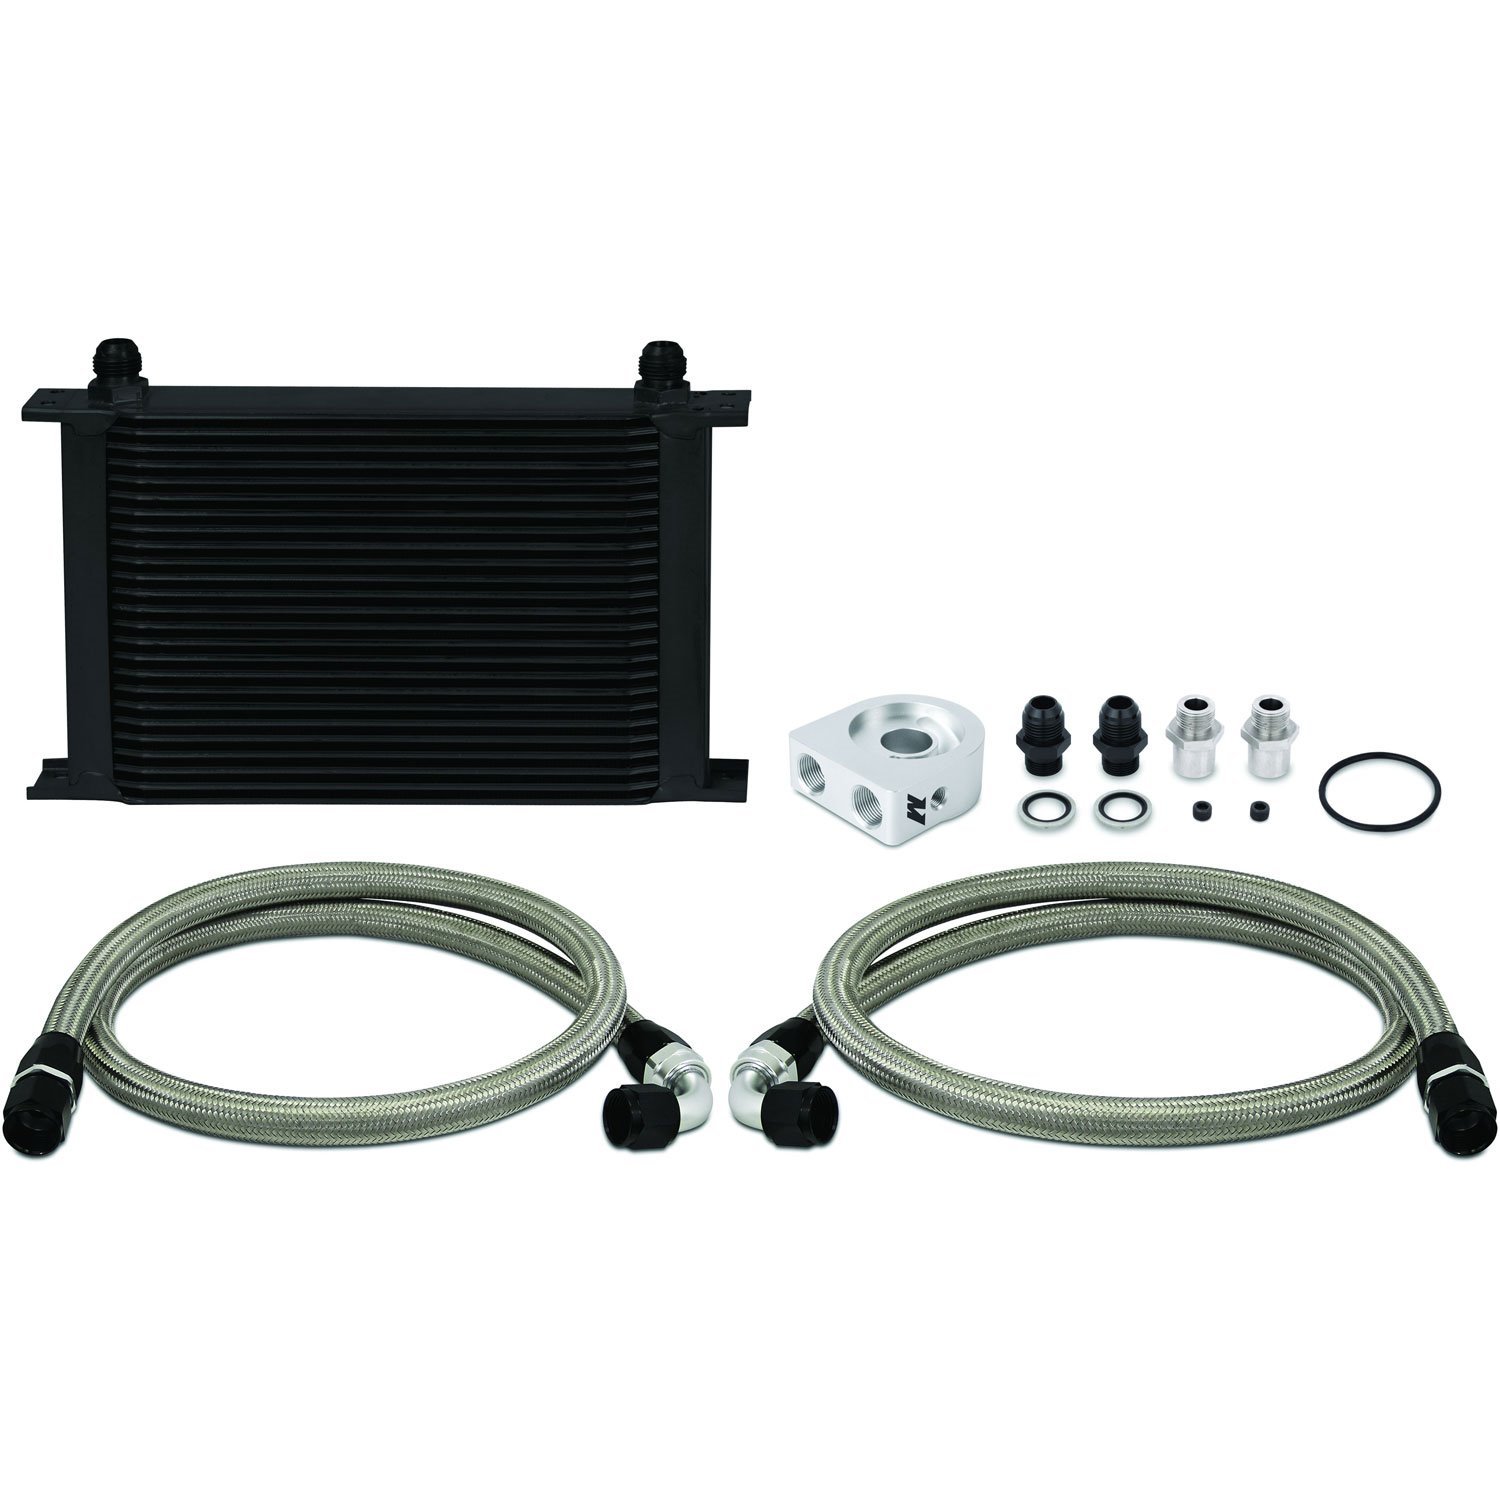 Universal Oil Cooler Kit Black 25 Row - MFG Part No. MMOC-UHBK